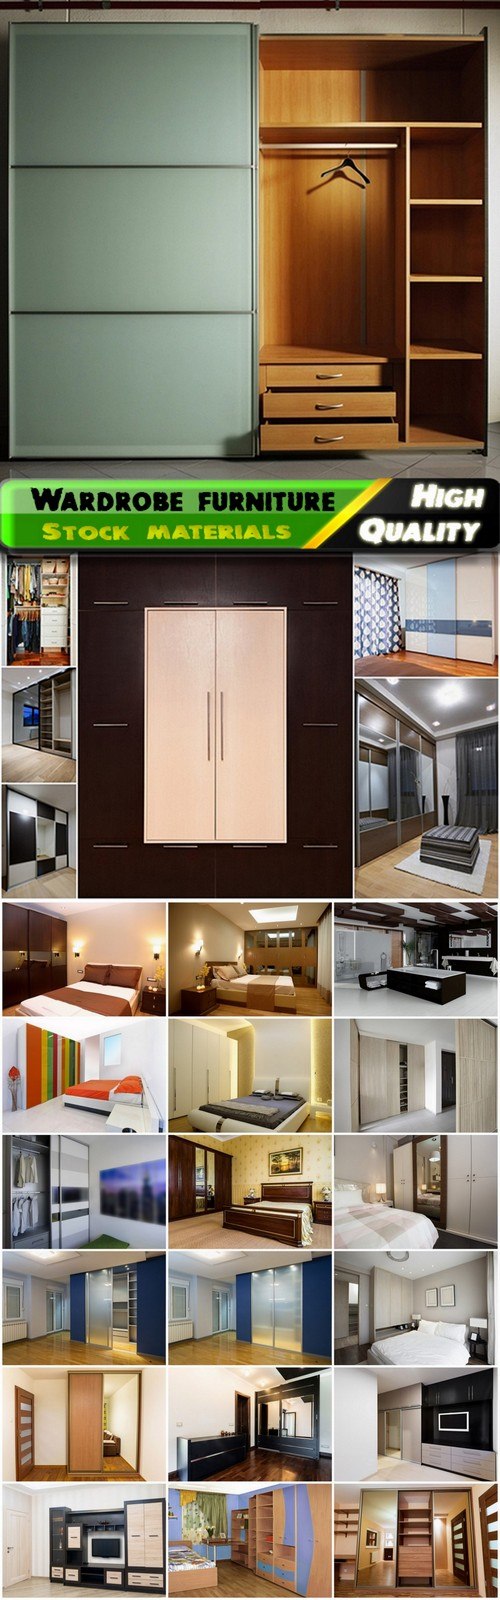 Home interior and wardrobe furniture - 25 HQ Jpg